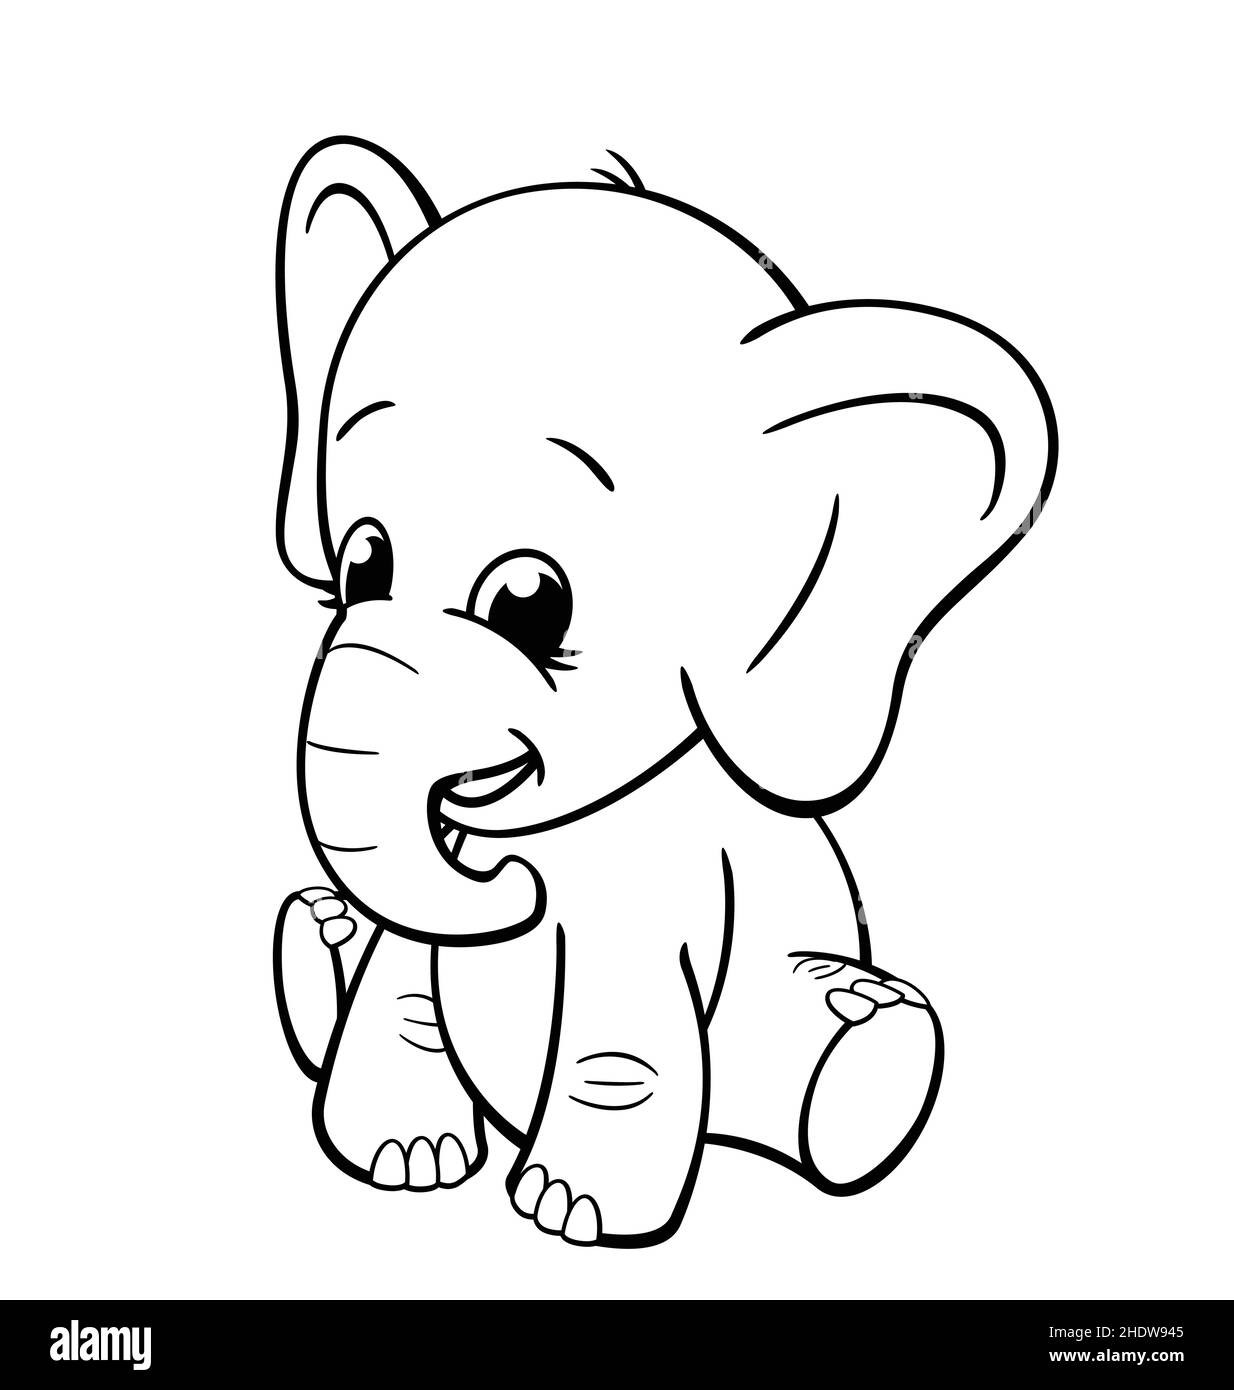 Cartoon cute happy cartoon elephant Black and White Stock Photos & Images -  Page 2 - Alamy